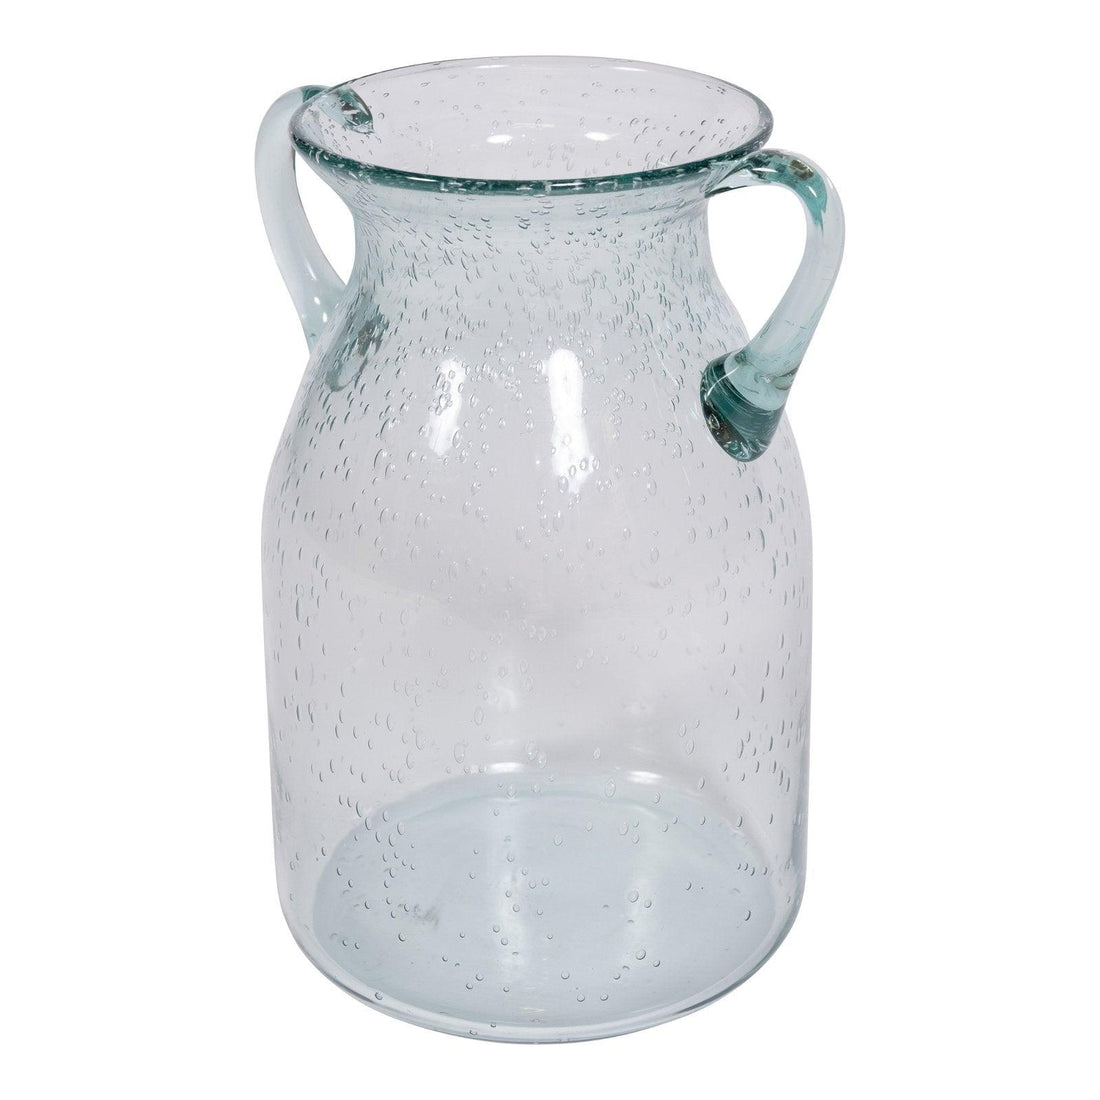 Glass Flower Vase with Handles Daisy Bubble Design 25cm - £52.99 - Vases 